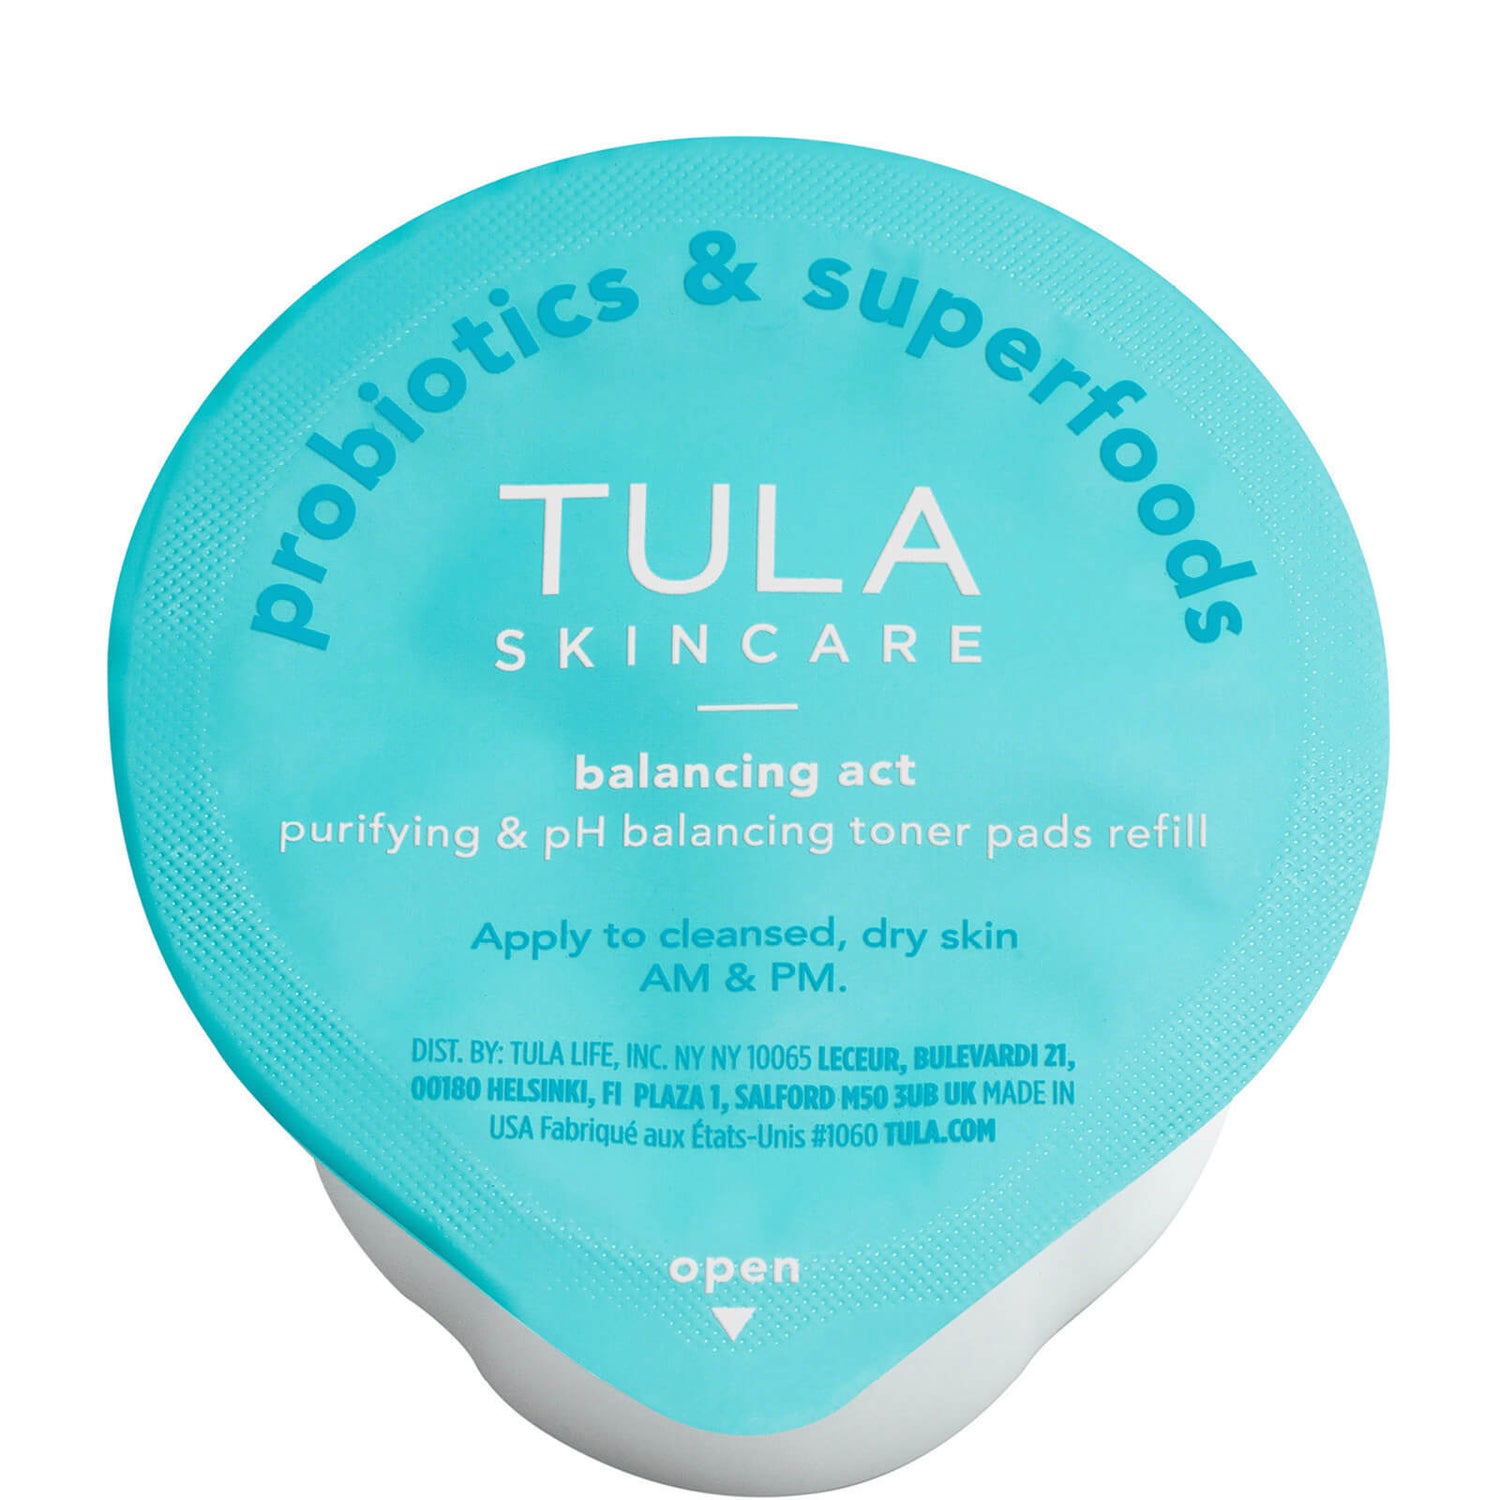 TULA Skincare Balancing Act Purifying pH Balancing Biodegradable Toner Pads Refill 60 count